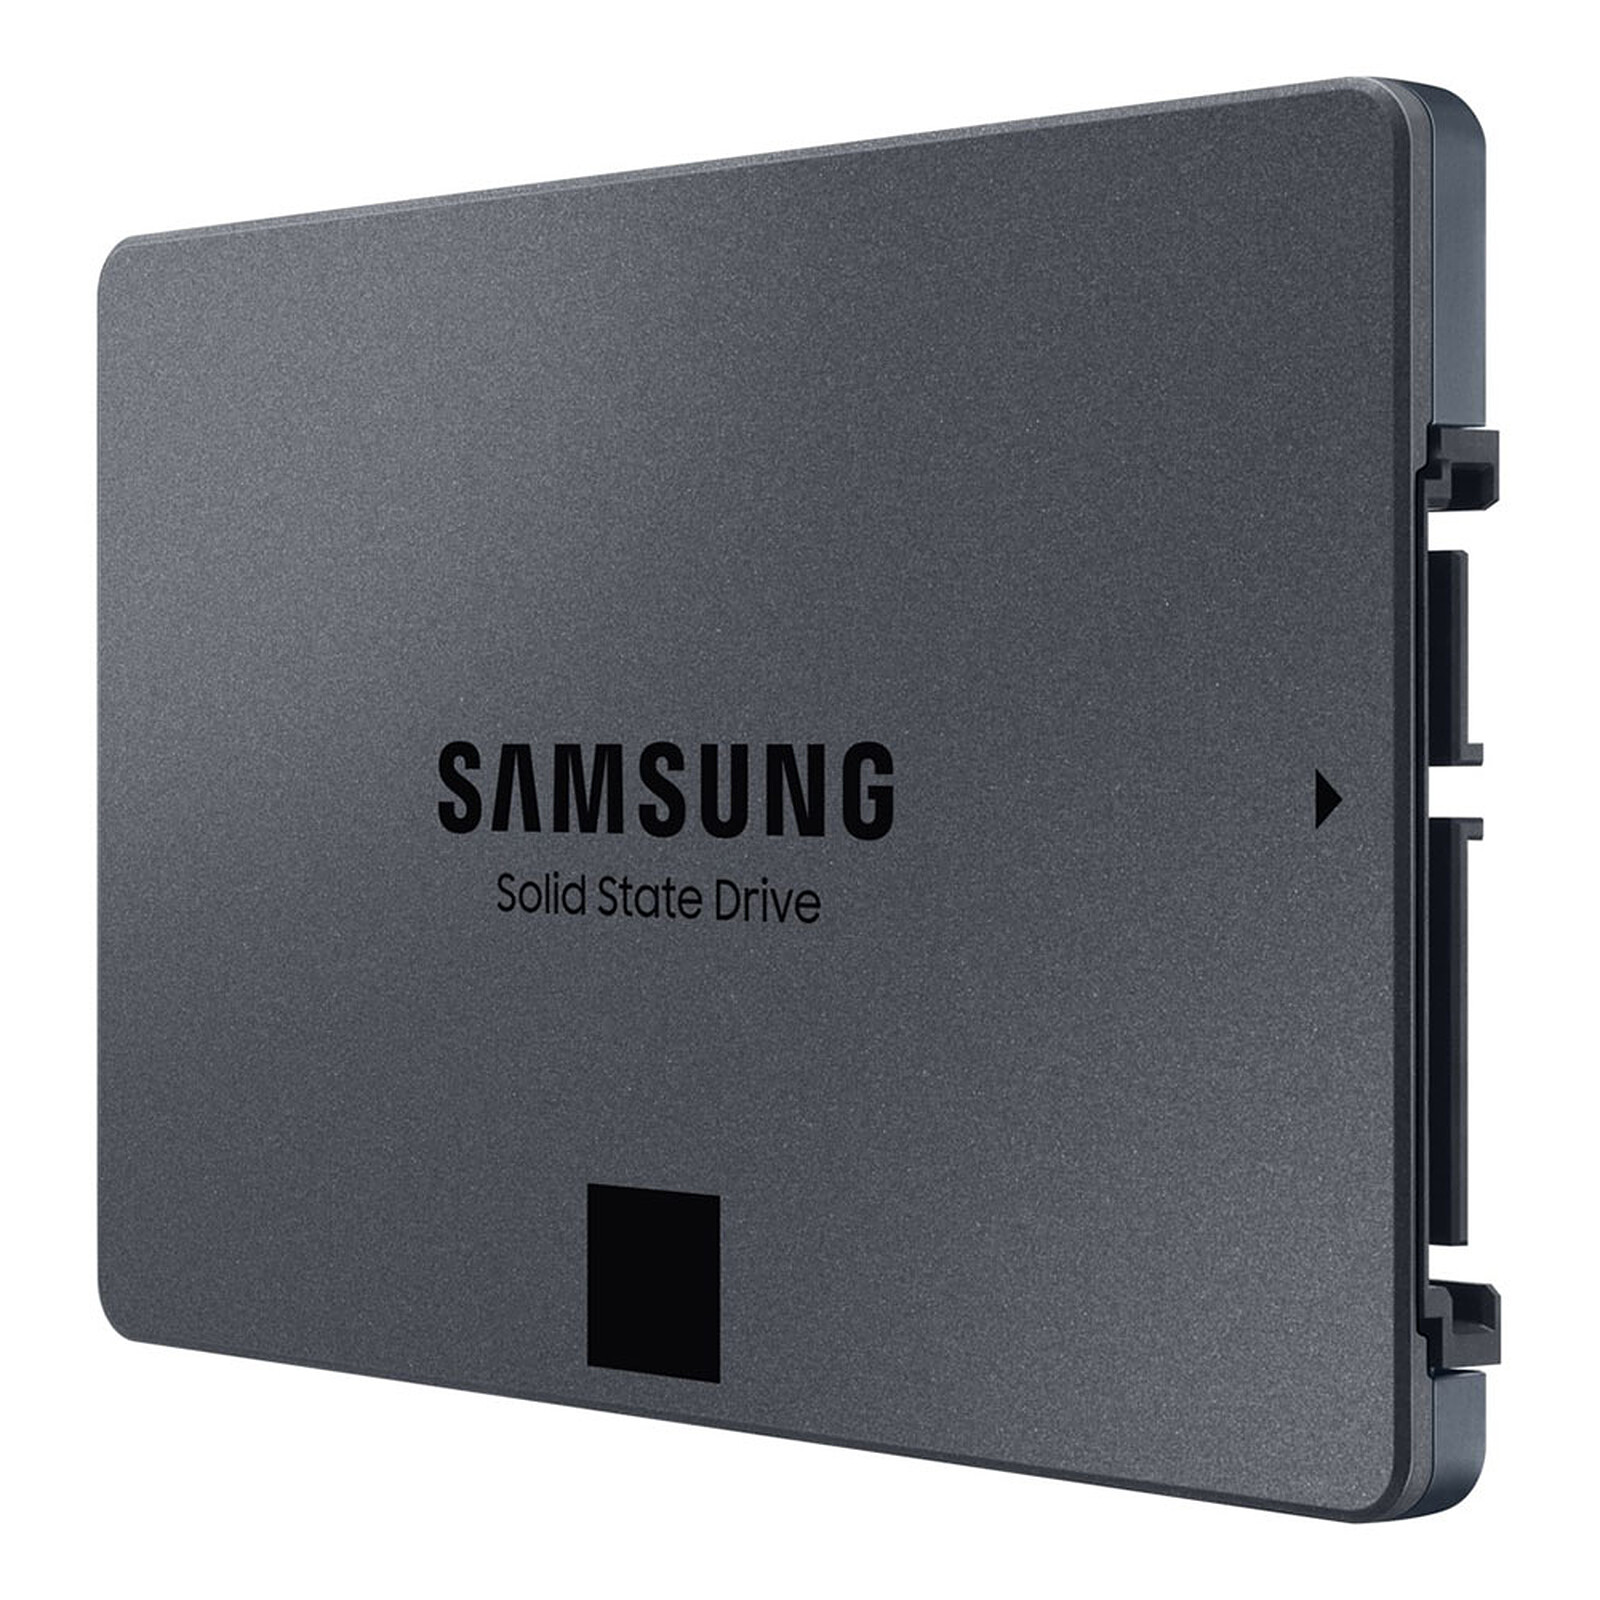 Samsung SSD 870 QVO - SSD Samsung LDLC